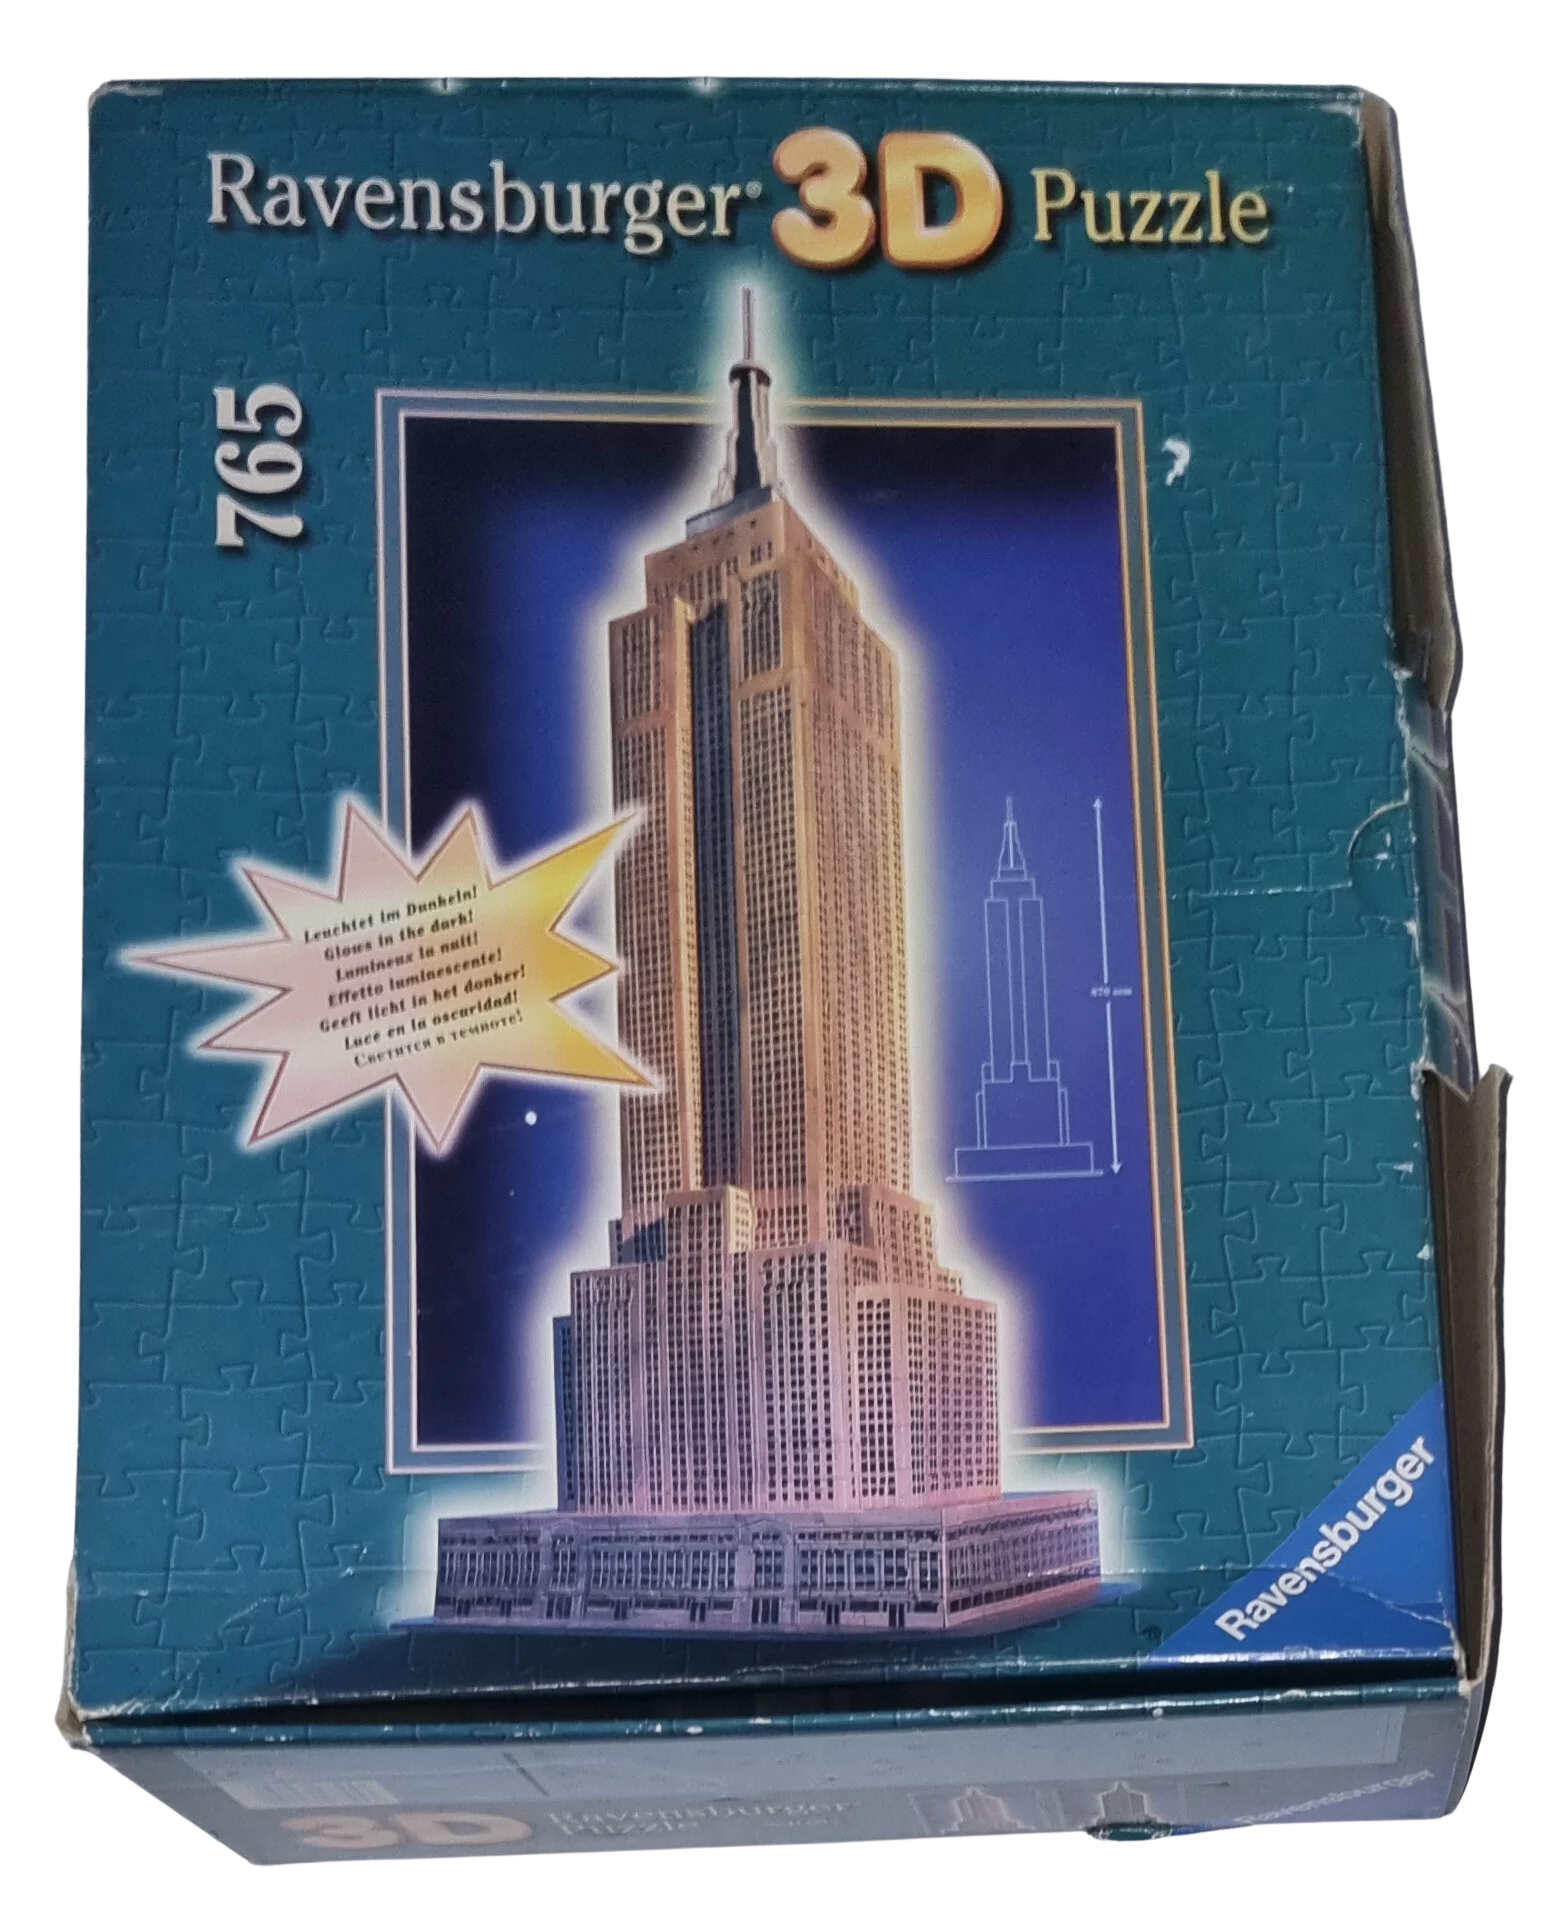 Ravensburger 3D Puzzle Brandenburger Tor 765 Teile 178957 Empire State Building